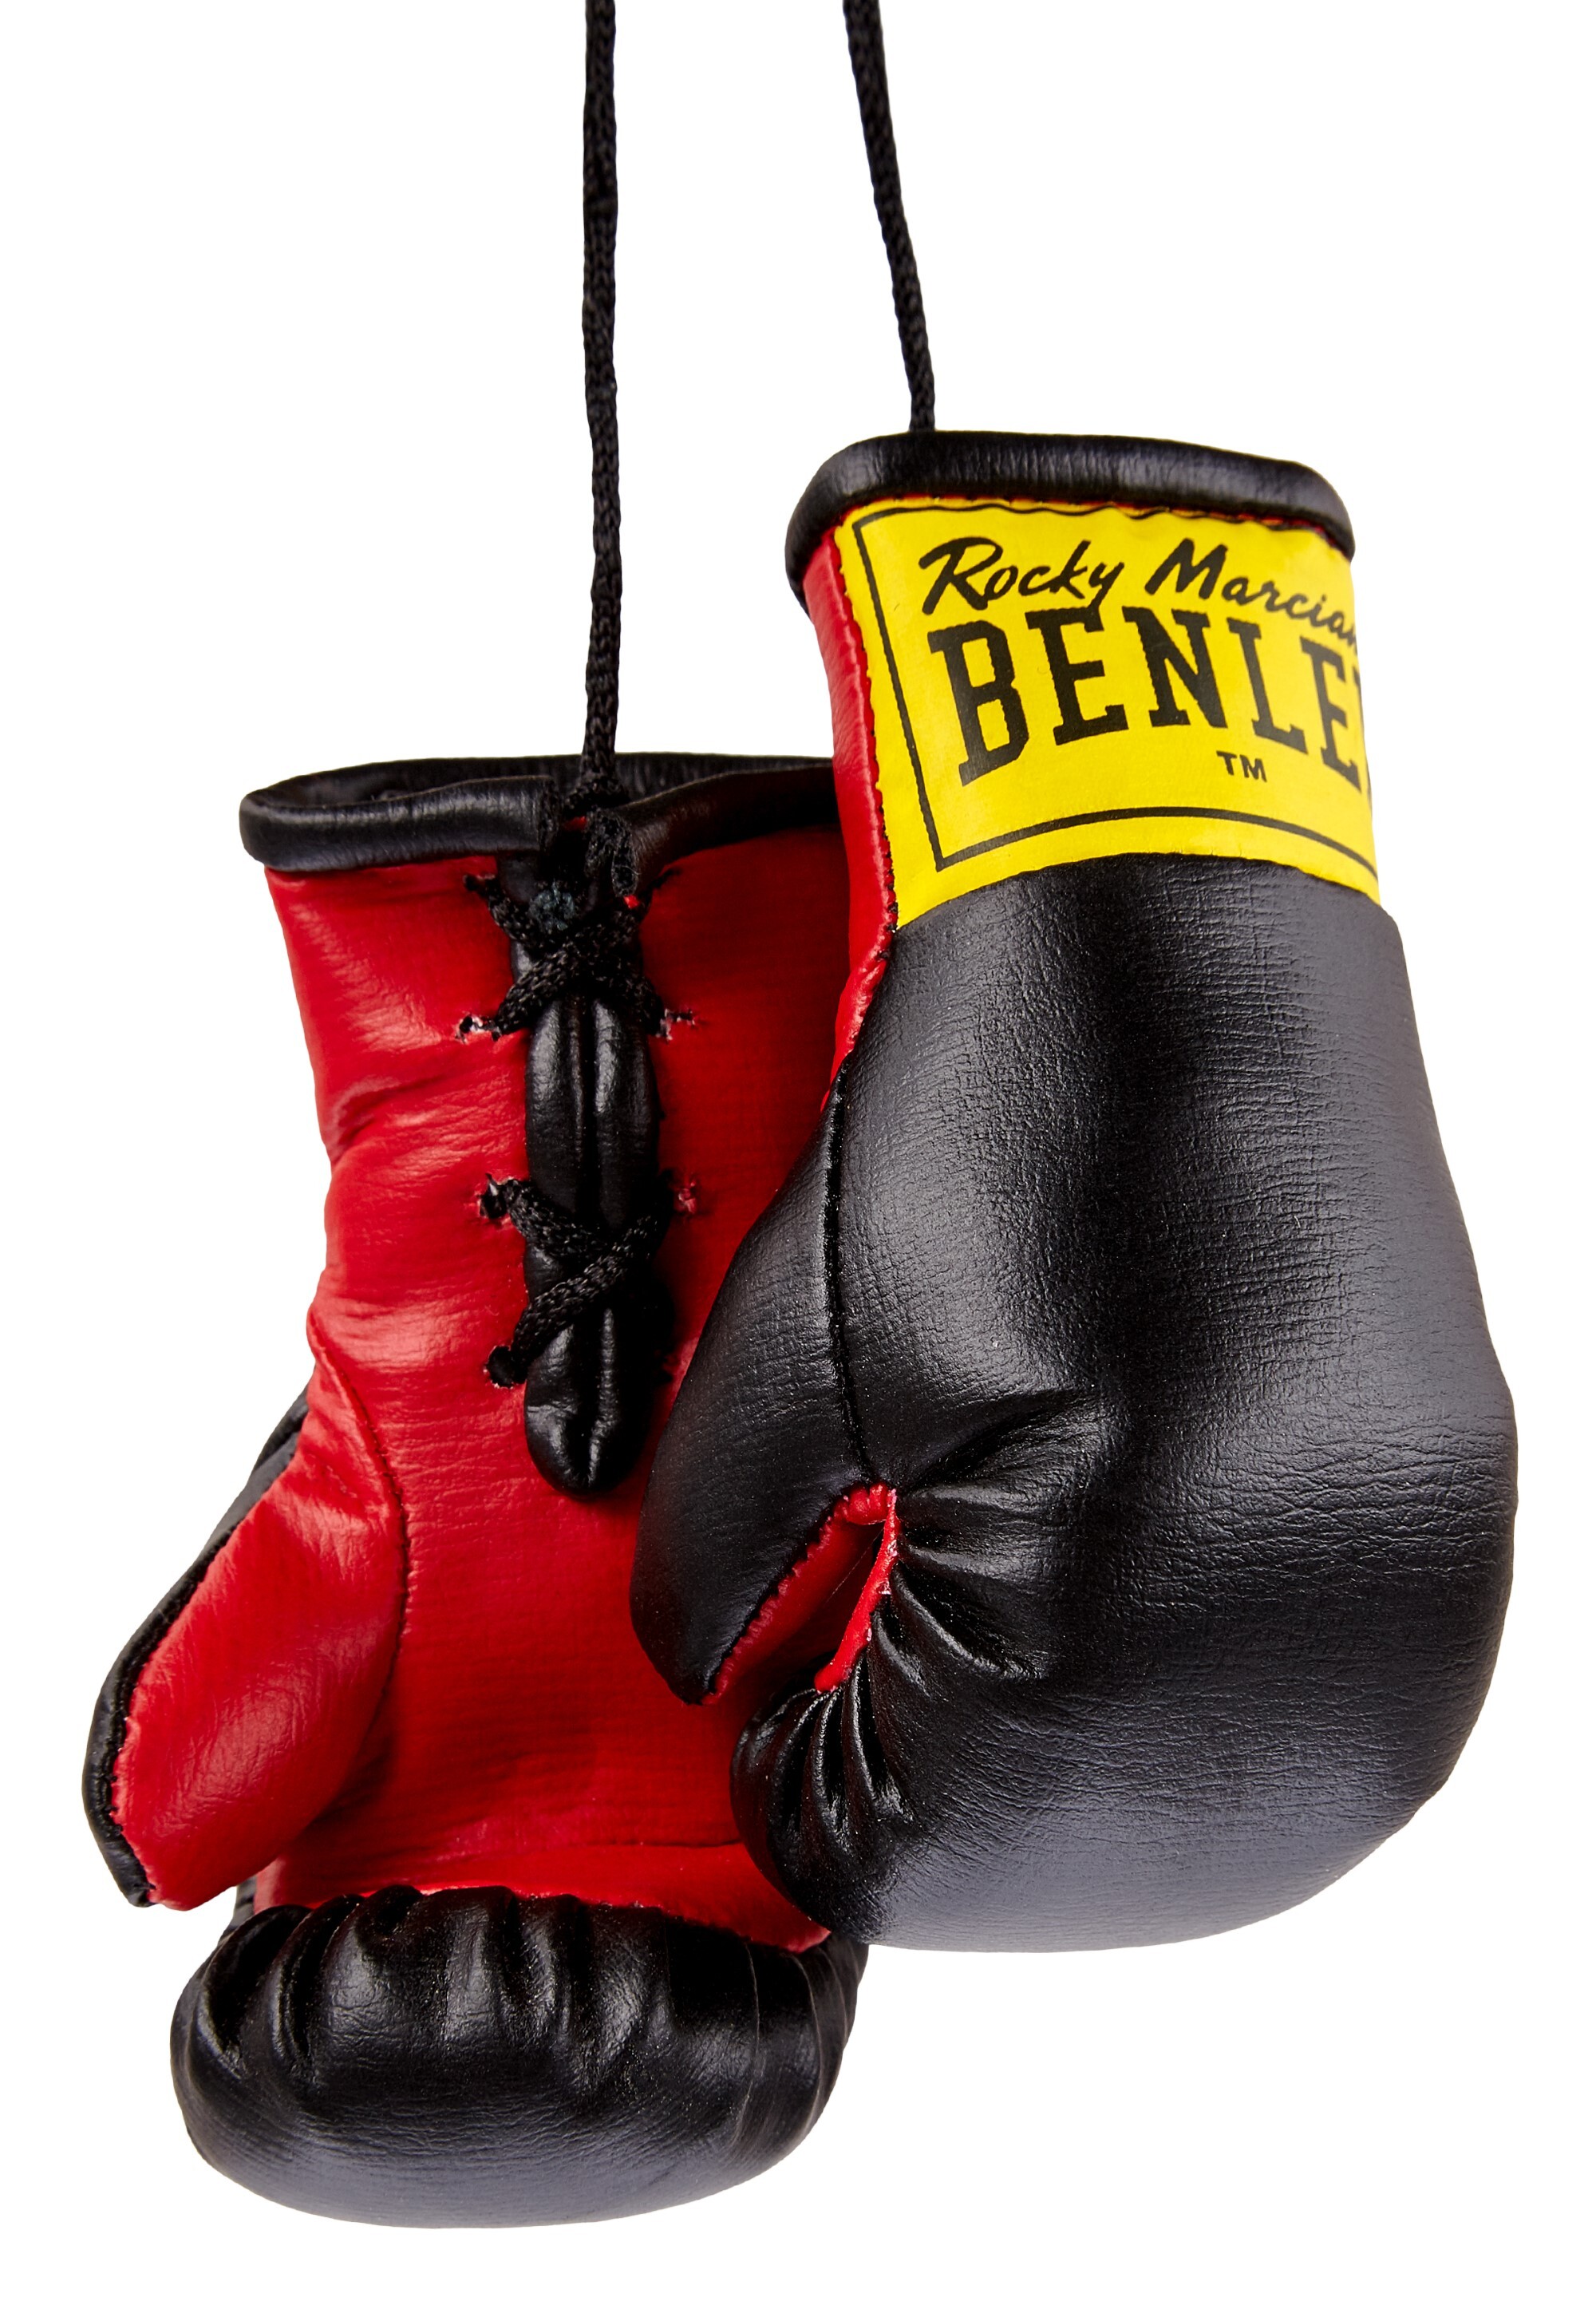 Benlee Mini Boxhandschuhe Black Auswahl hier